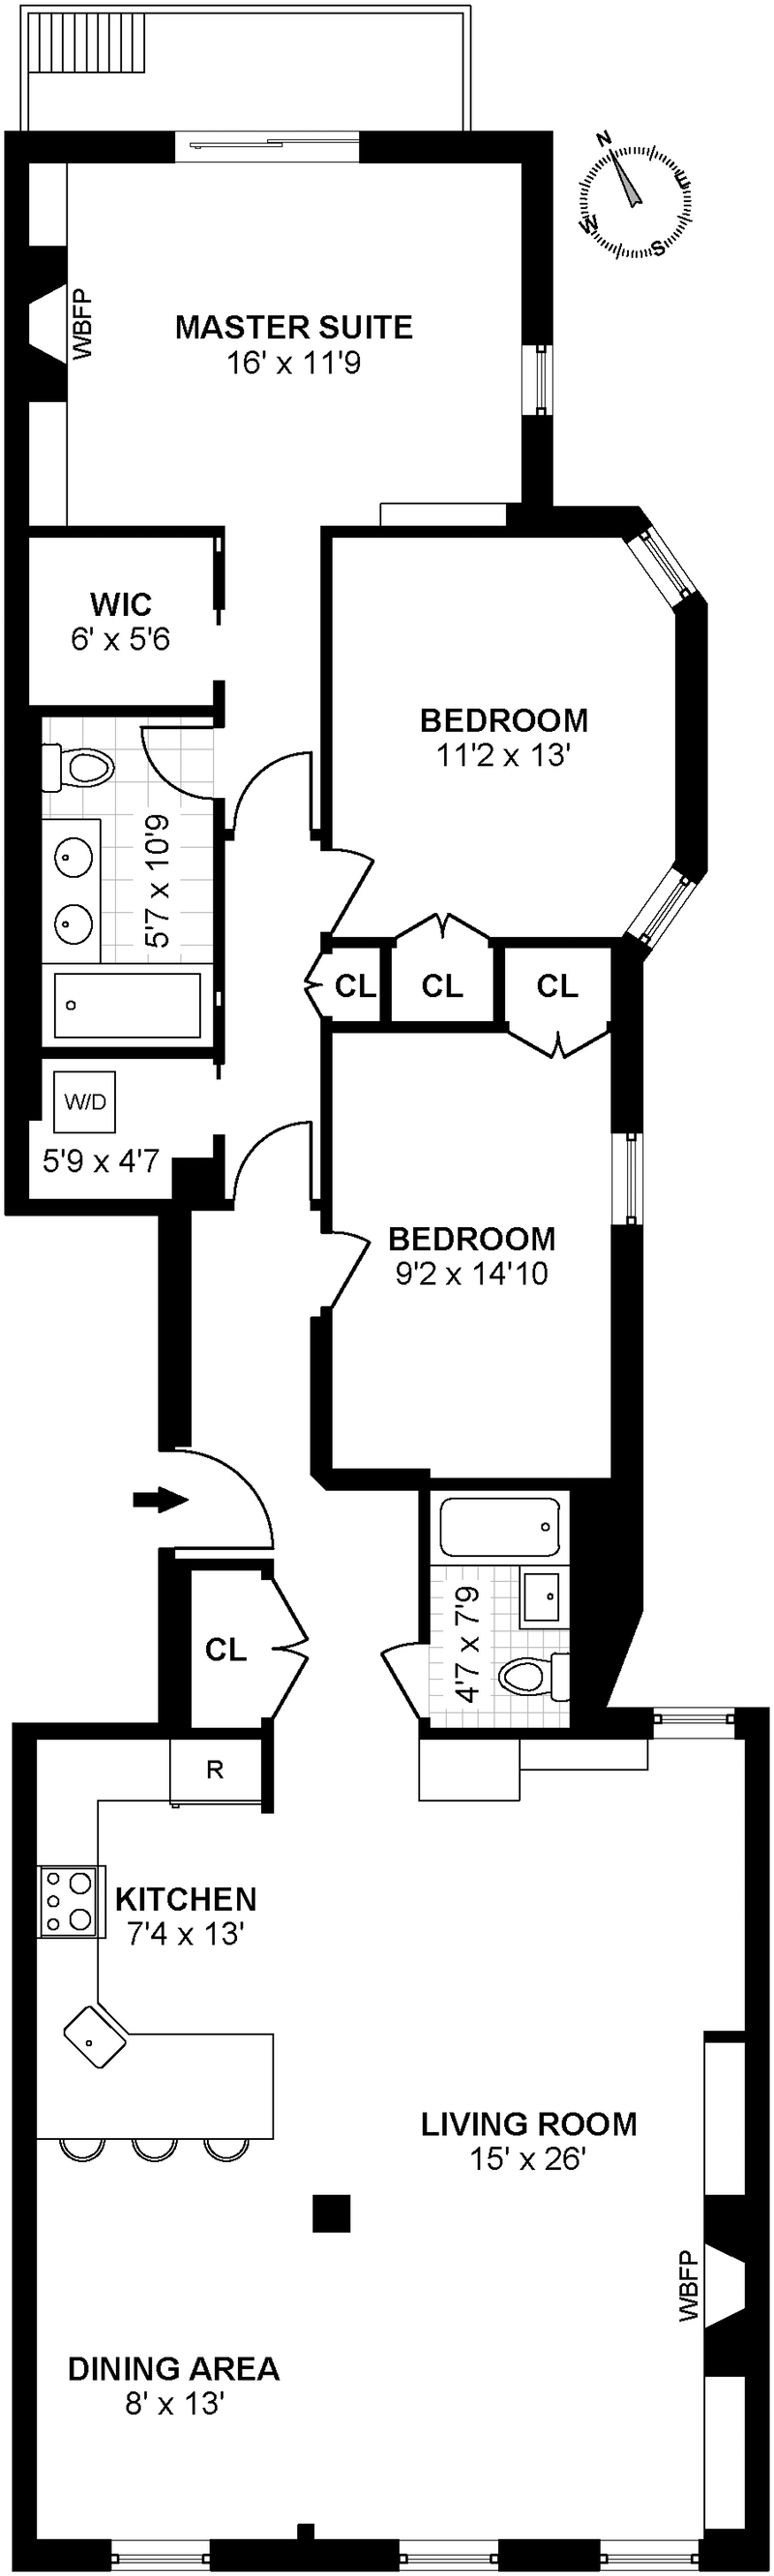 Floorplan for 105 East 19th Street